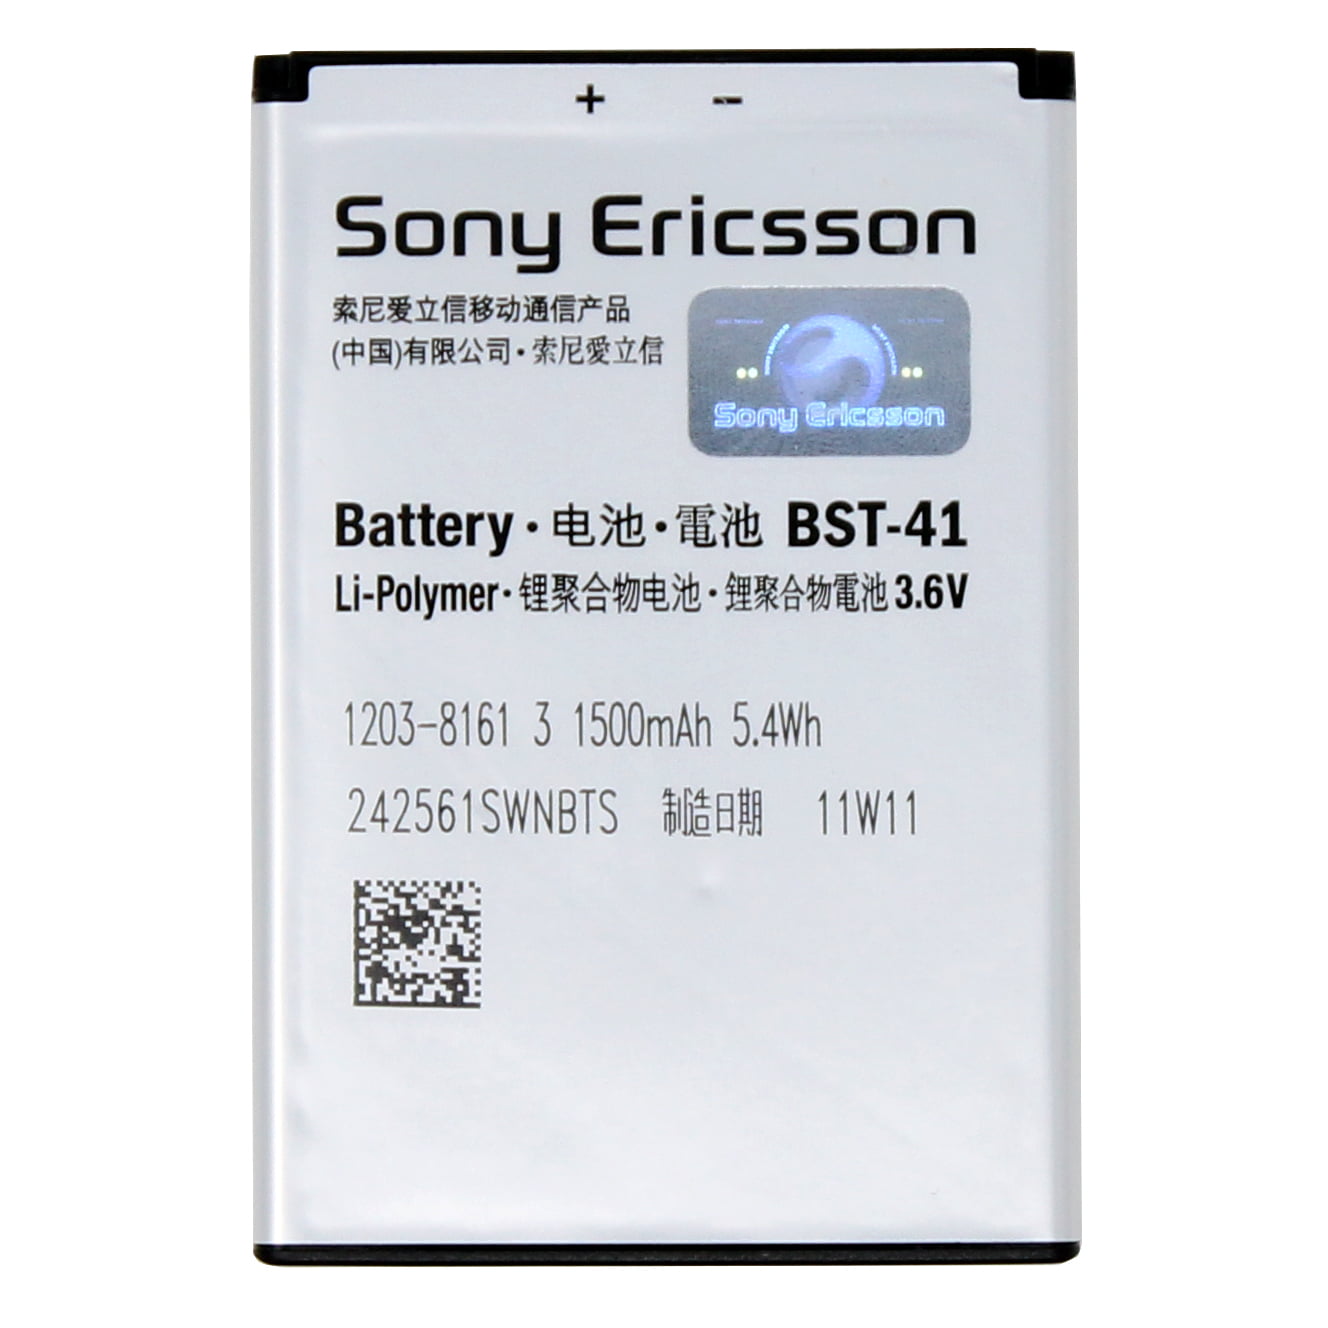 Аккумулятор для телефона сони. Sony Ericsson BST-41. Sony Ericsson Xperia x10 Mini аккумулятор. BST-41 аккумулятор. Аккумуляторы BST для сони Эриксон.